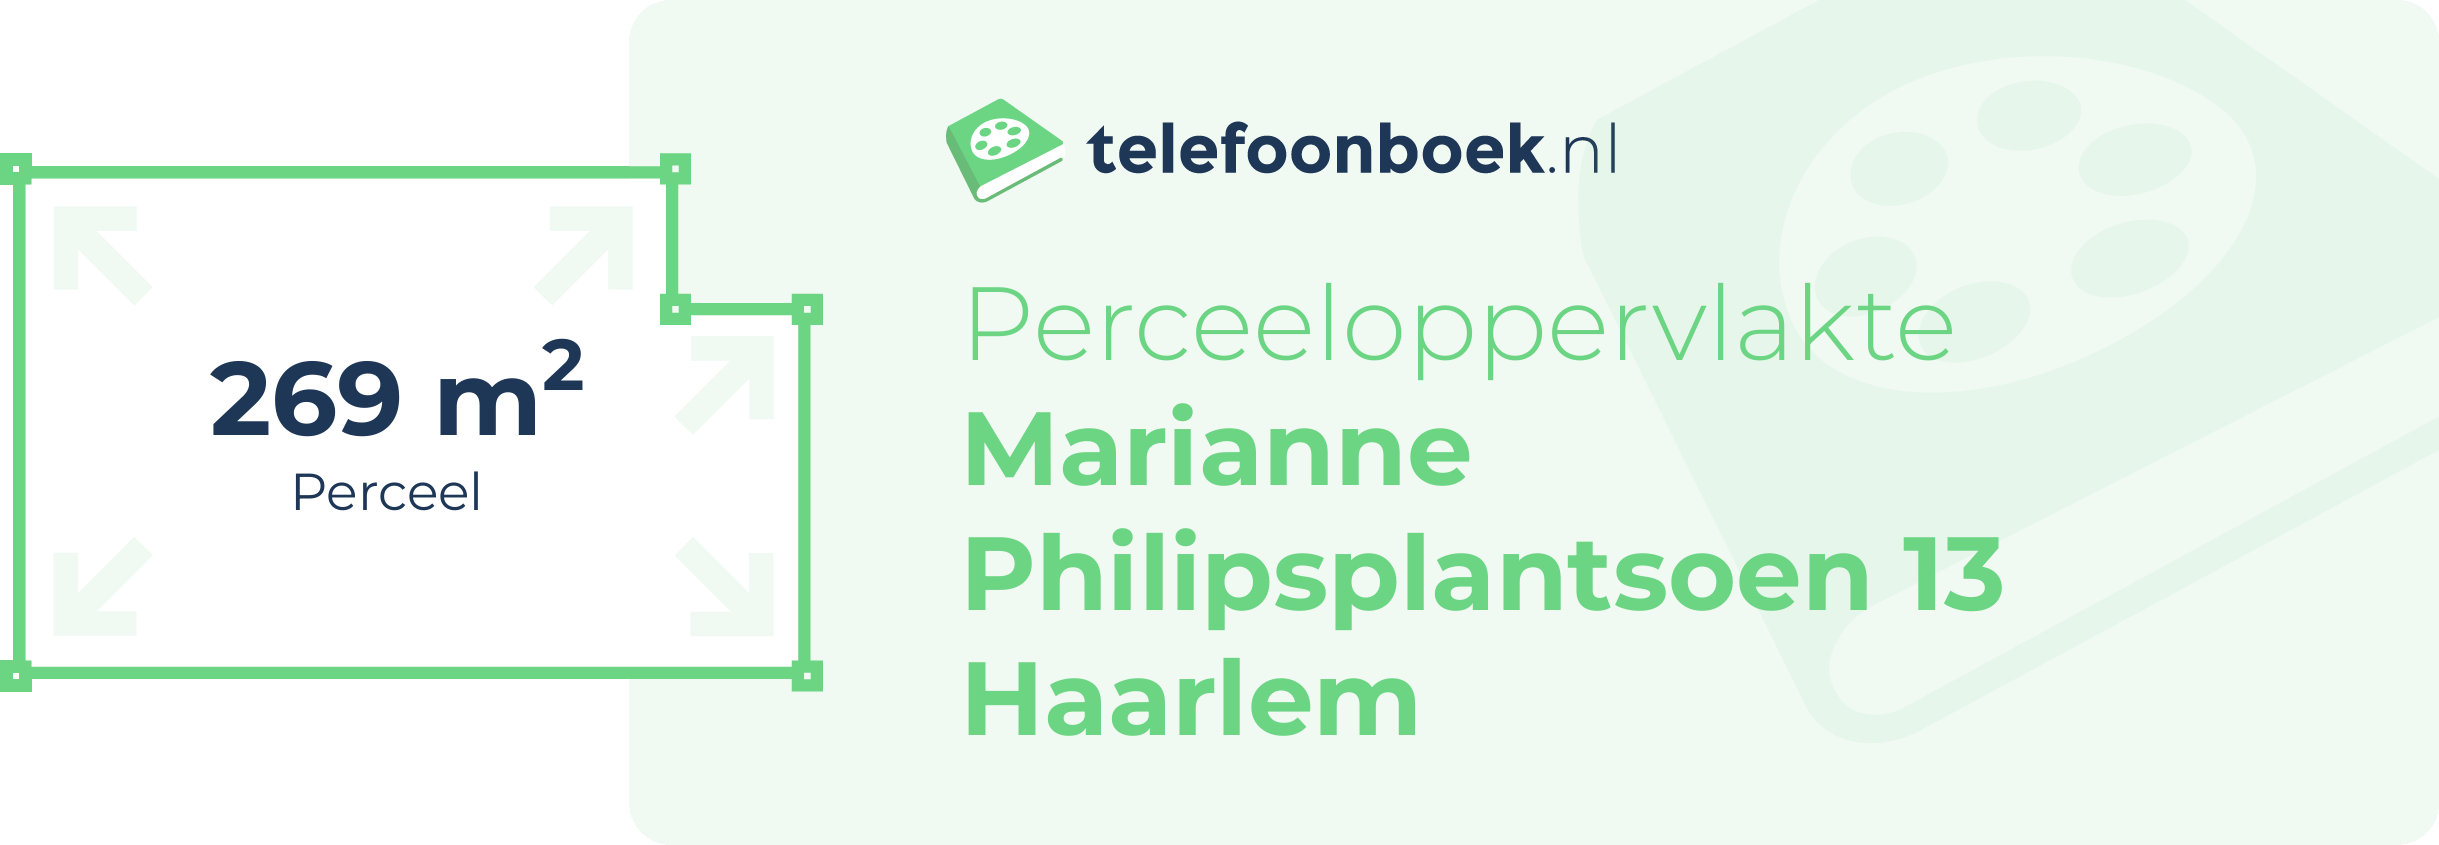 Perceeloppervlakte Marianne Philipsplantsoen 13 Haarlem